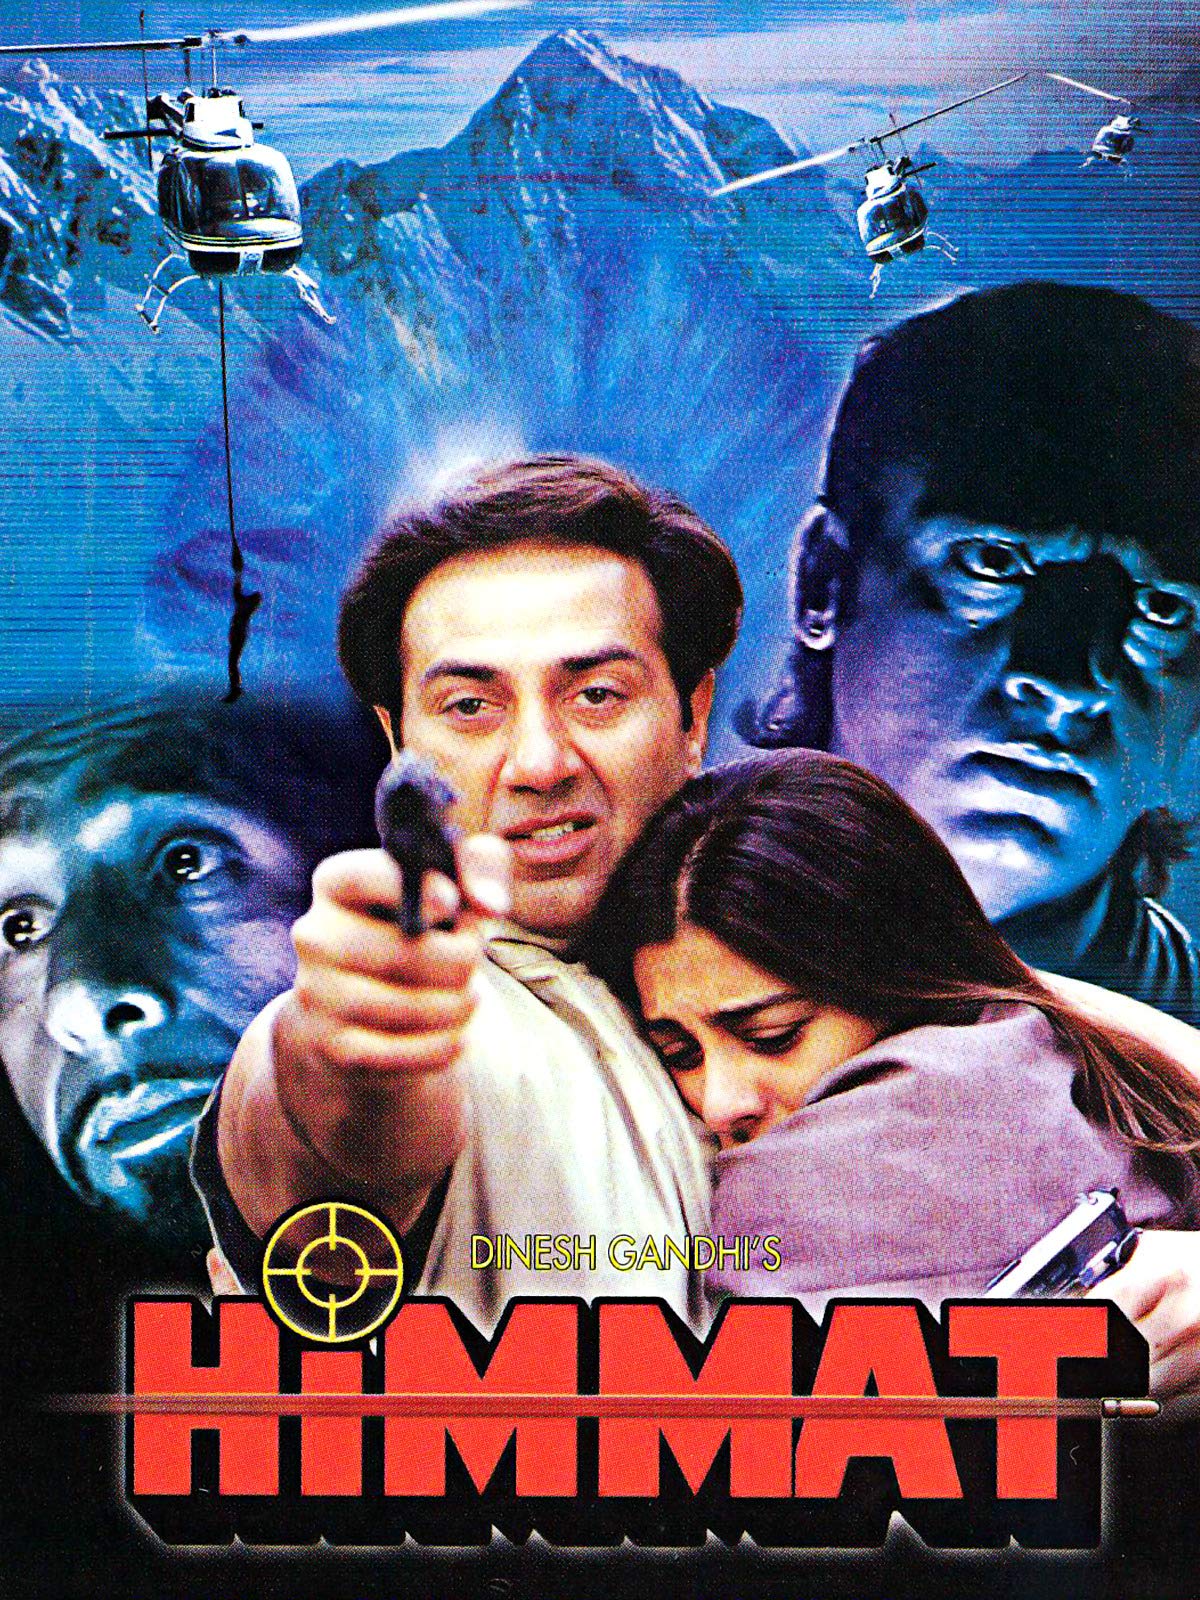 Himmat 1996 5279 Poster.jpg